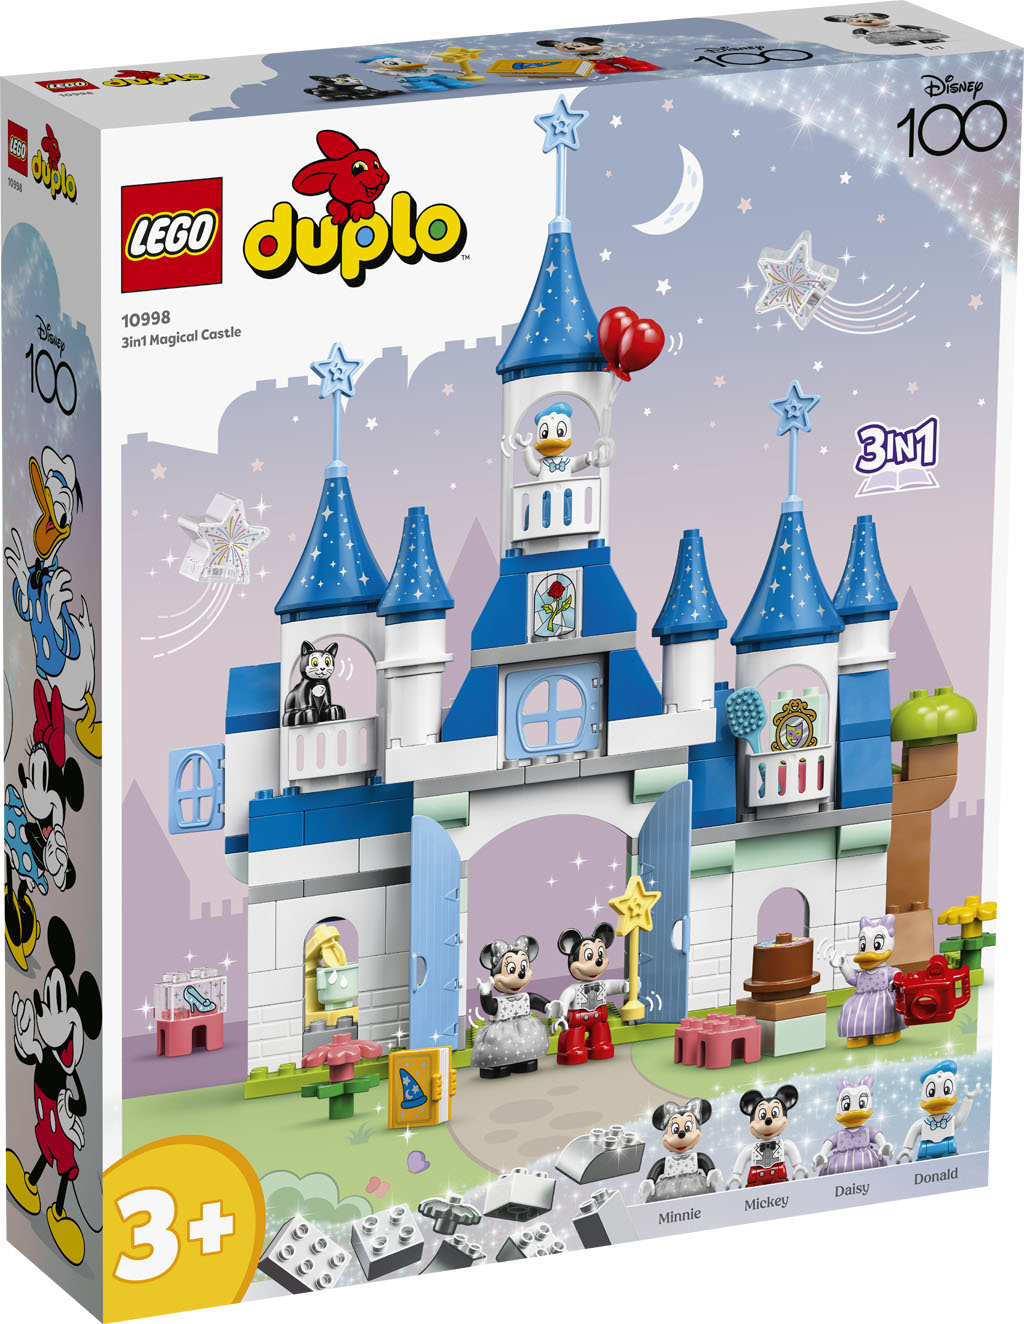 LEGO DUPLO Disney 3 In 1 Magical Castle 10998